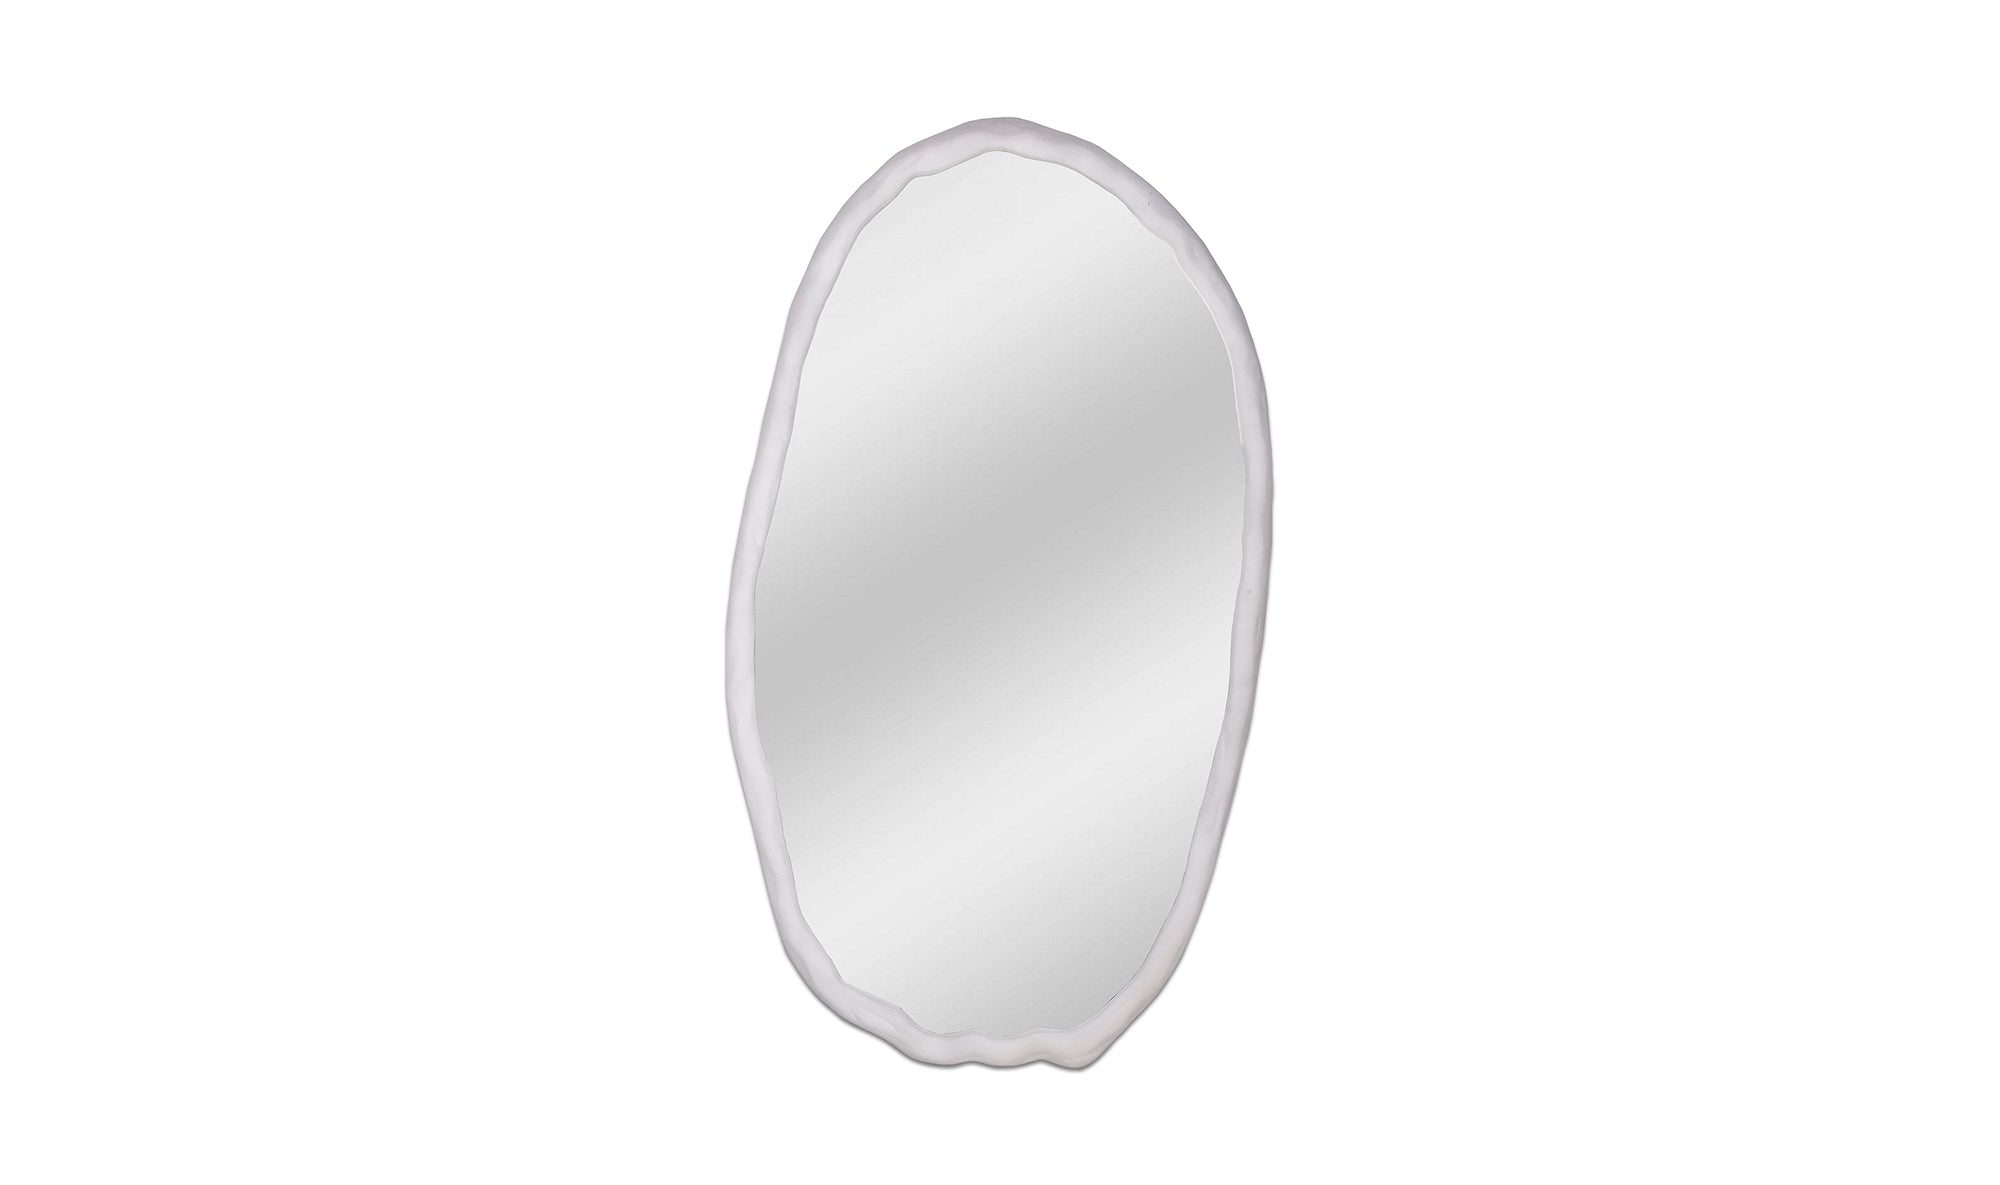 Foundry Oval Mirror- White